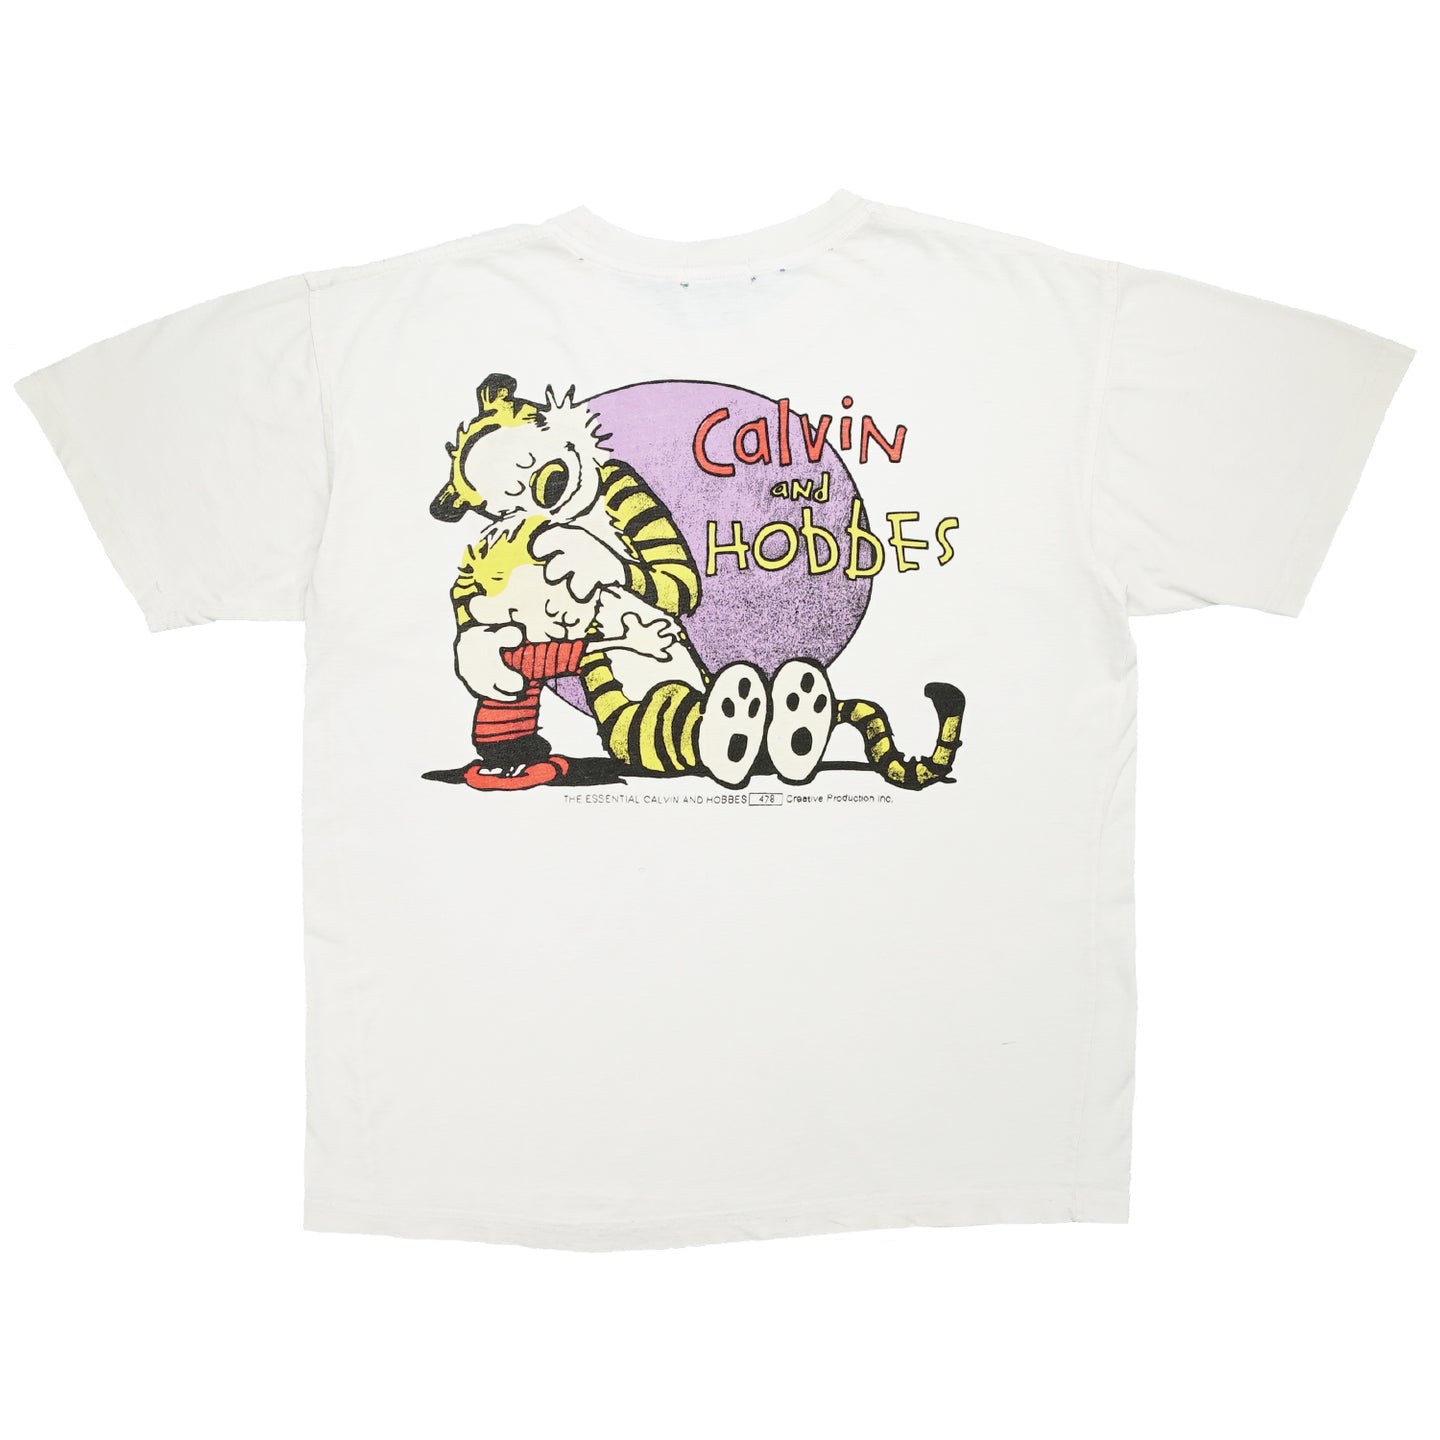 Bootleg Calvin and Hobbes comic graphic tee L